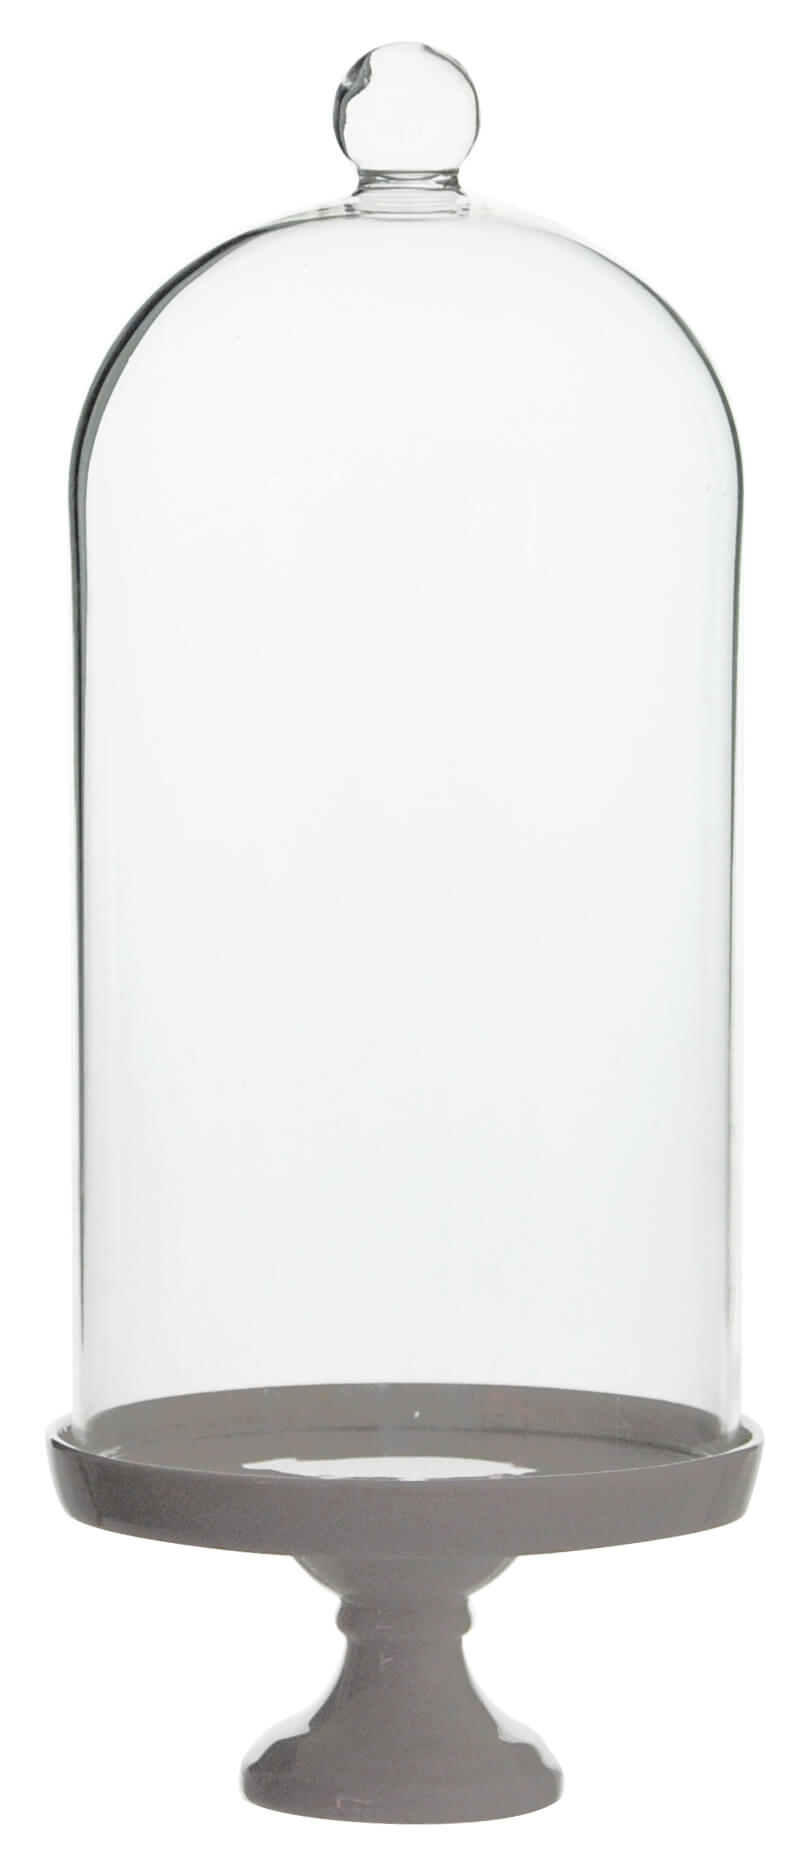 Glasglocke mit Porzellanteller Dekoglocke Glassturz Glasdom Glashaube Deko Tischdeko 30cm